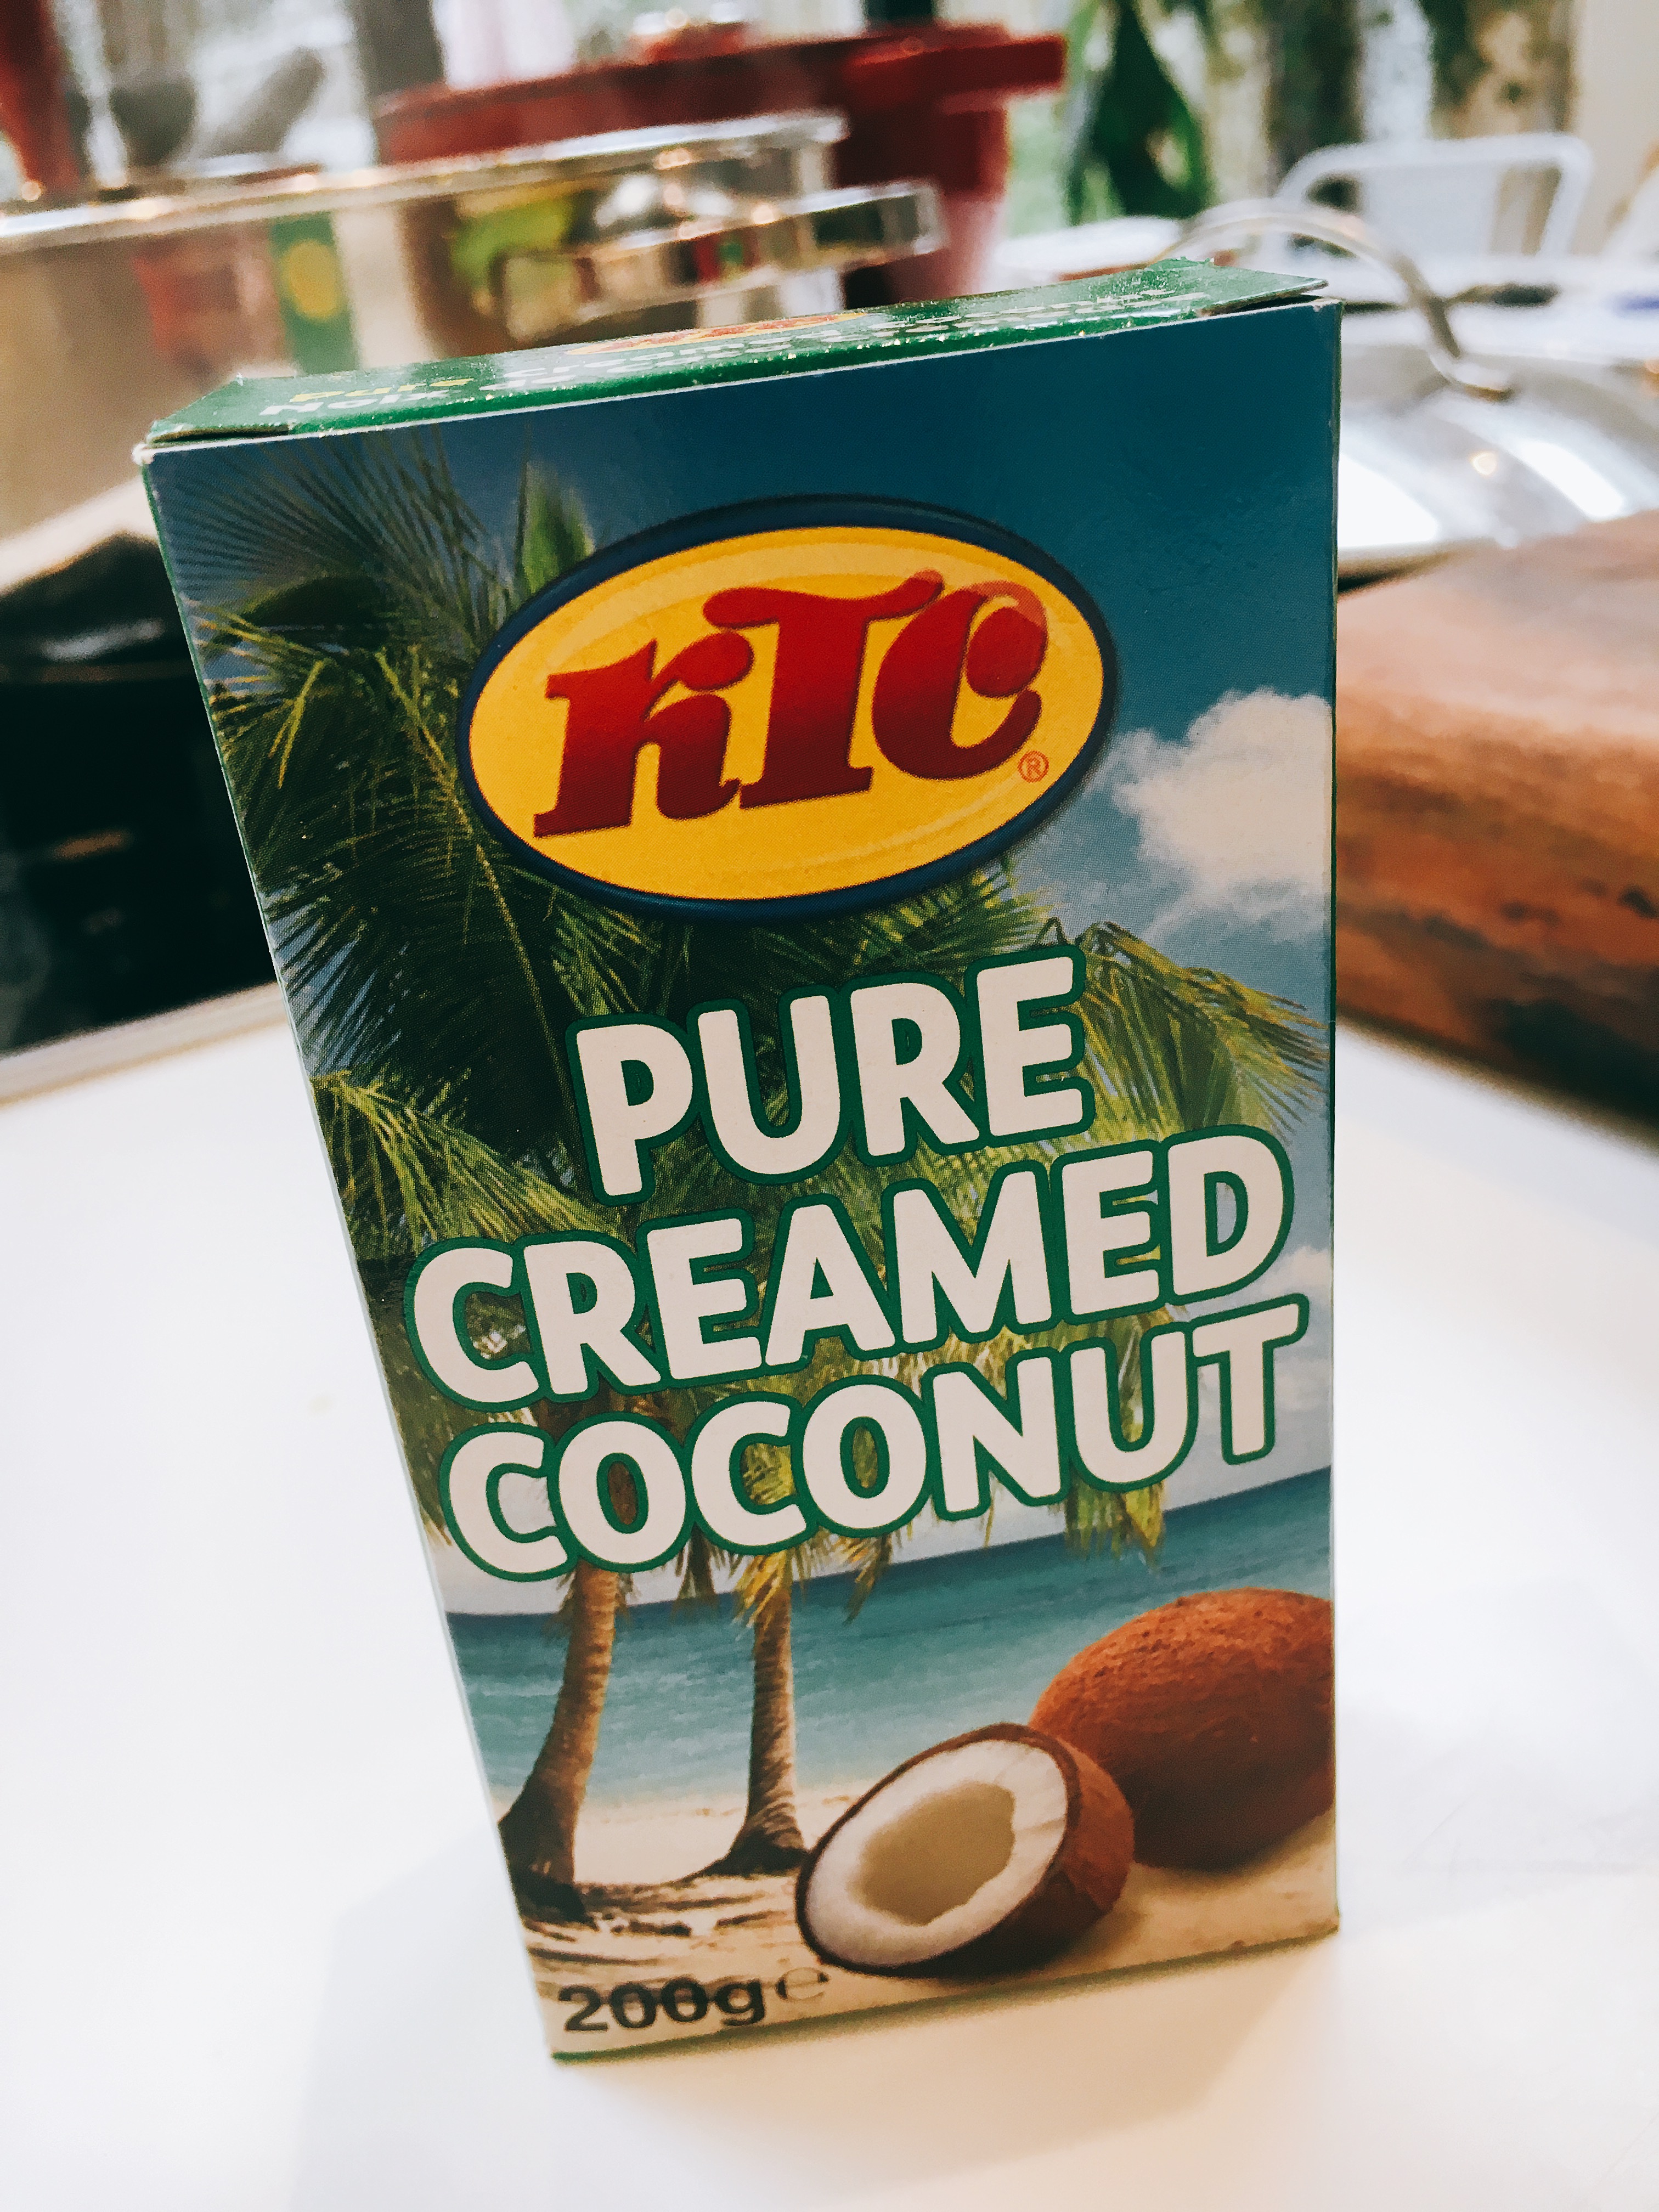 KTC creamedcoconut